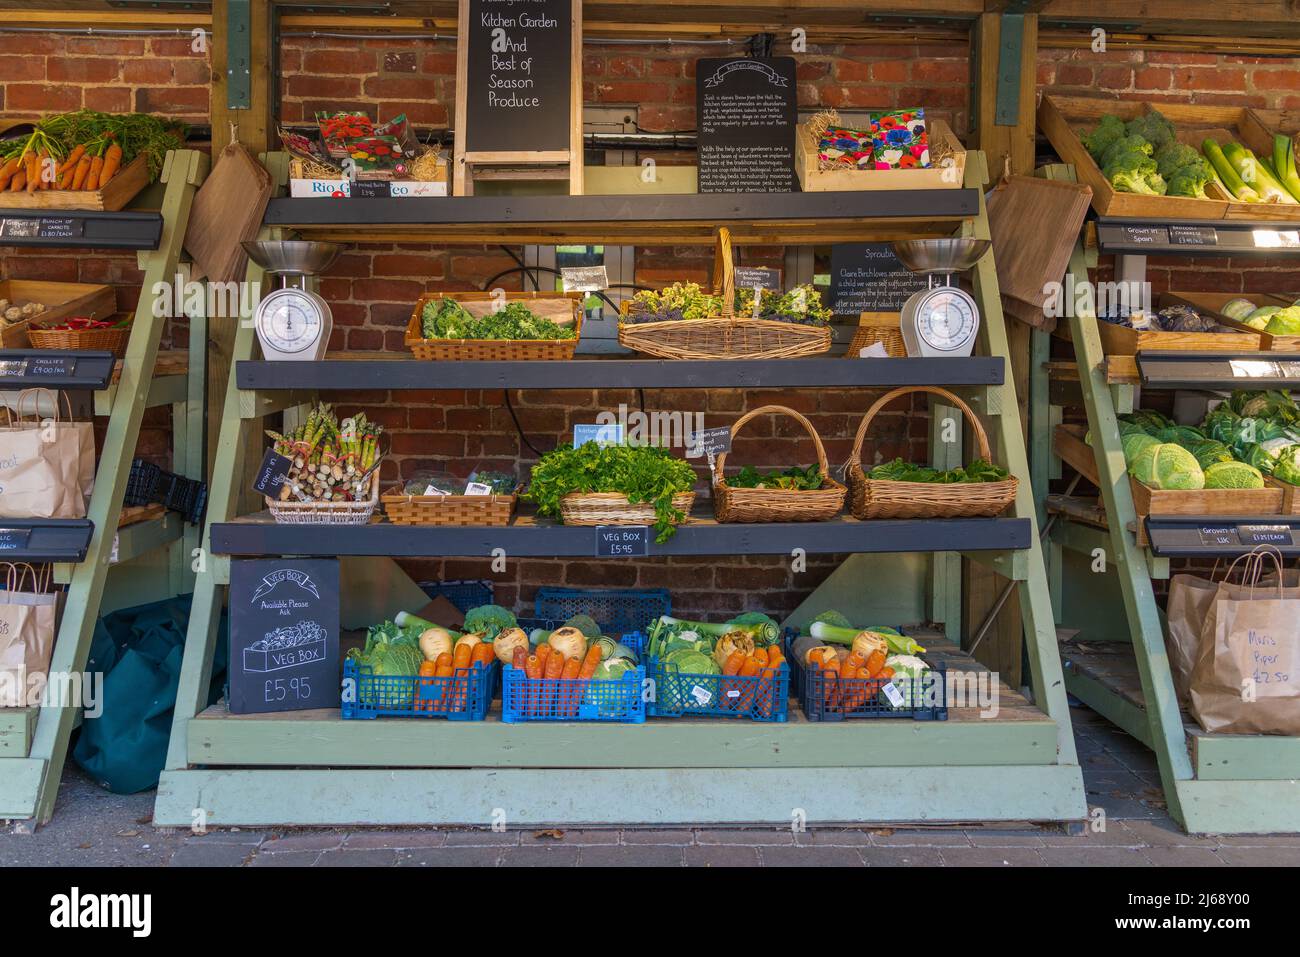 Fruit, vegetable display,  rhubarb, kale, organic, mushrooms, brown mushrooms, blood-oranges, green bananas, red apples, tomatoes, green apples, fruit Stock Photo